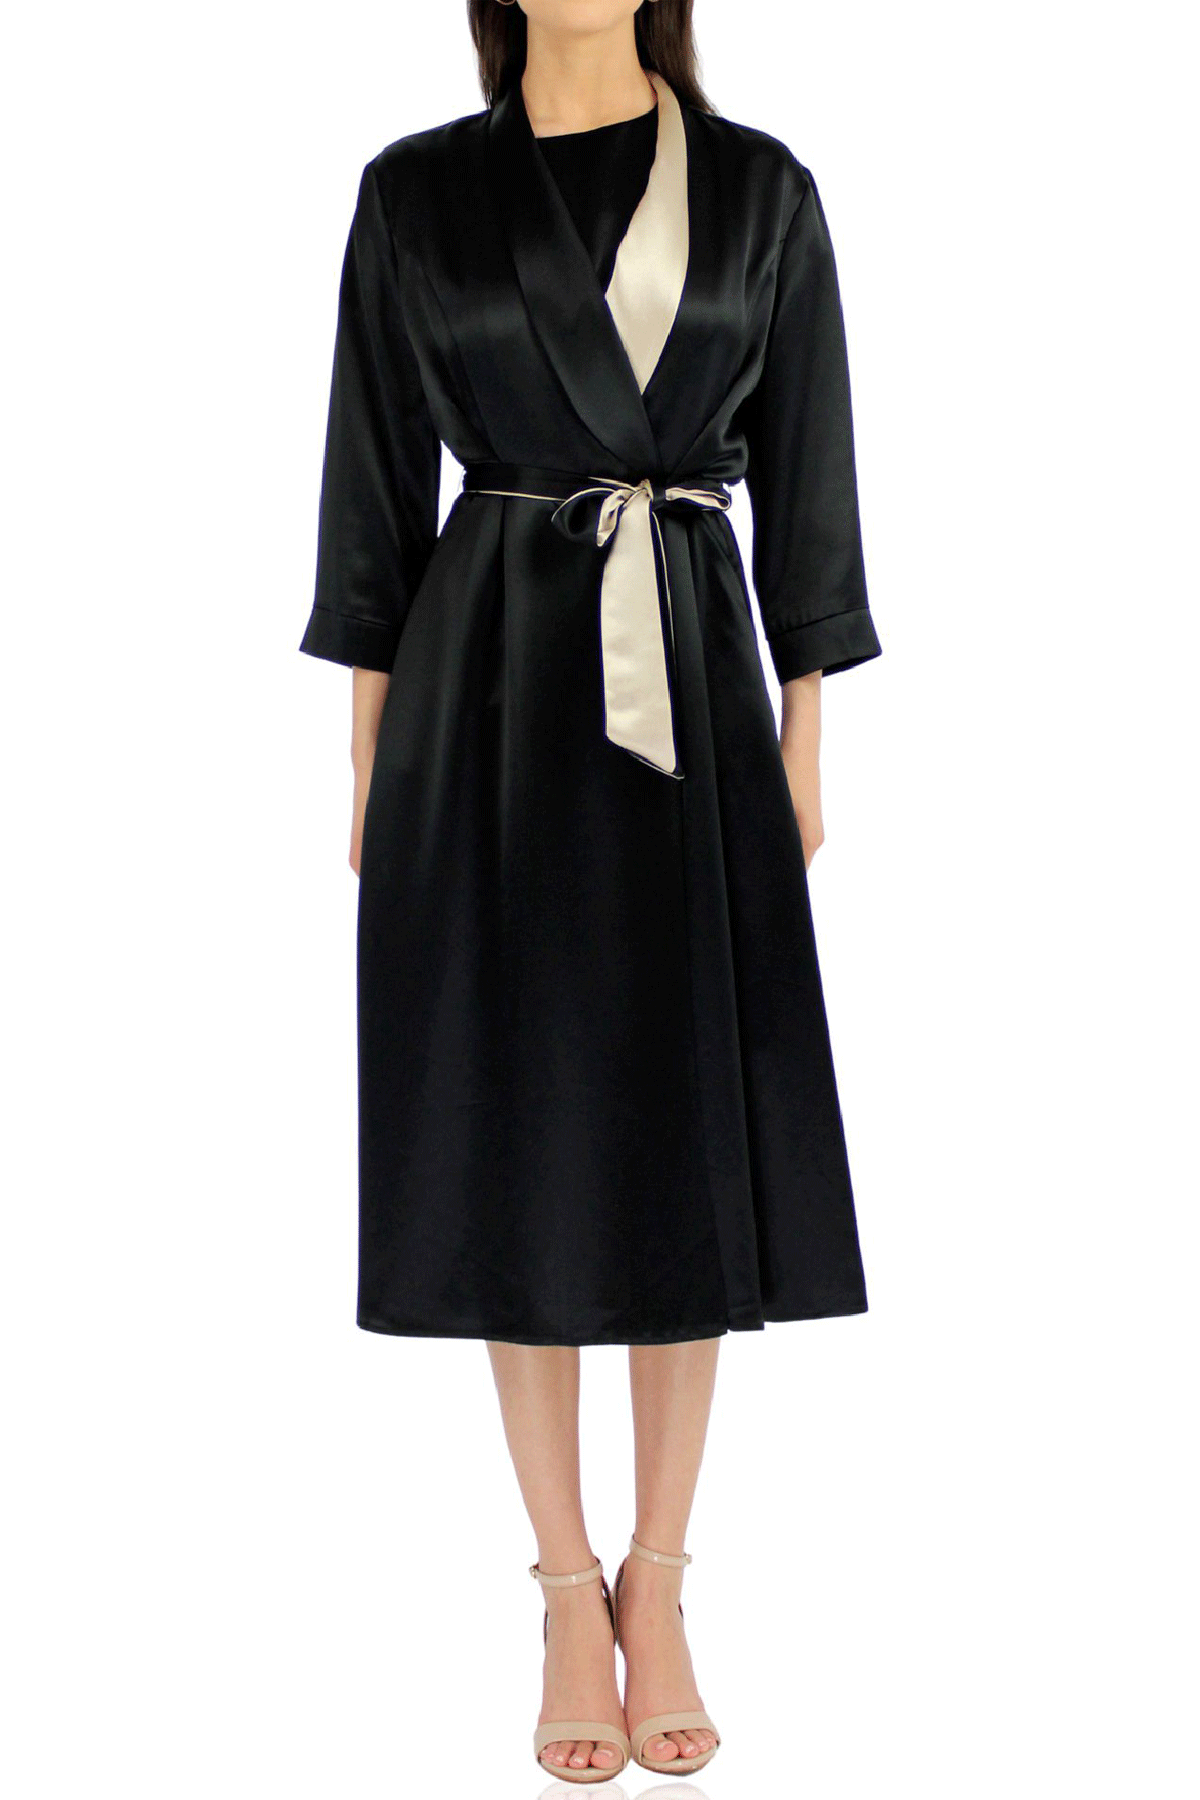 "Kyle X Shahida" "short silk kimono robe" "black robe short" "short silk robes for women"